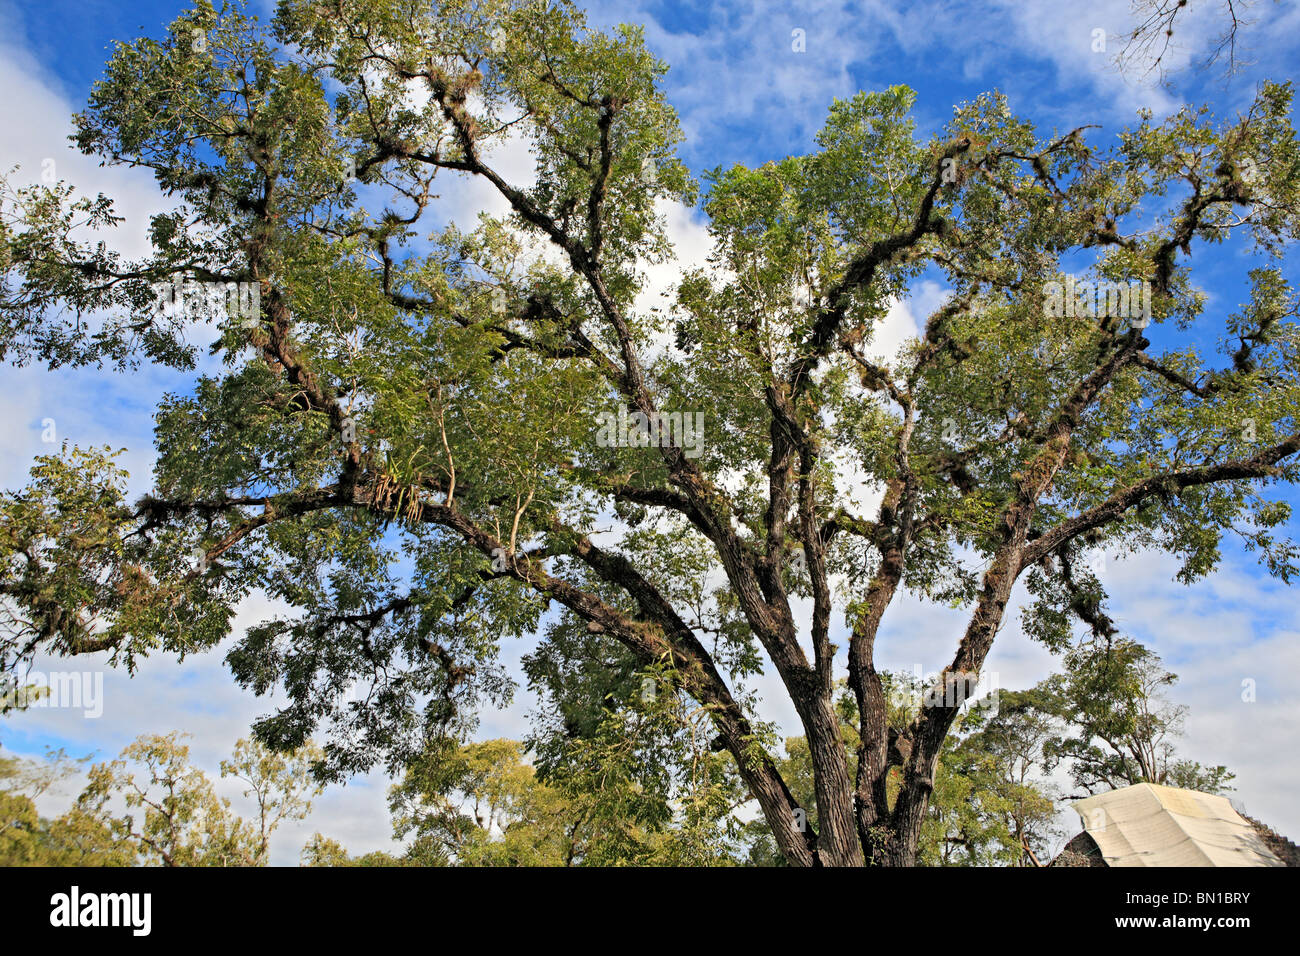 Old Tree, Copan (Honrduras), Guatemala Stock Photo